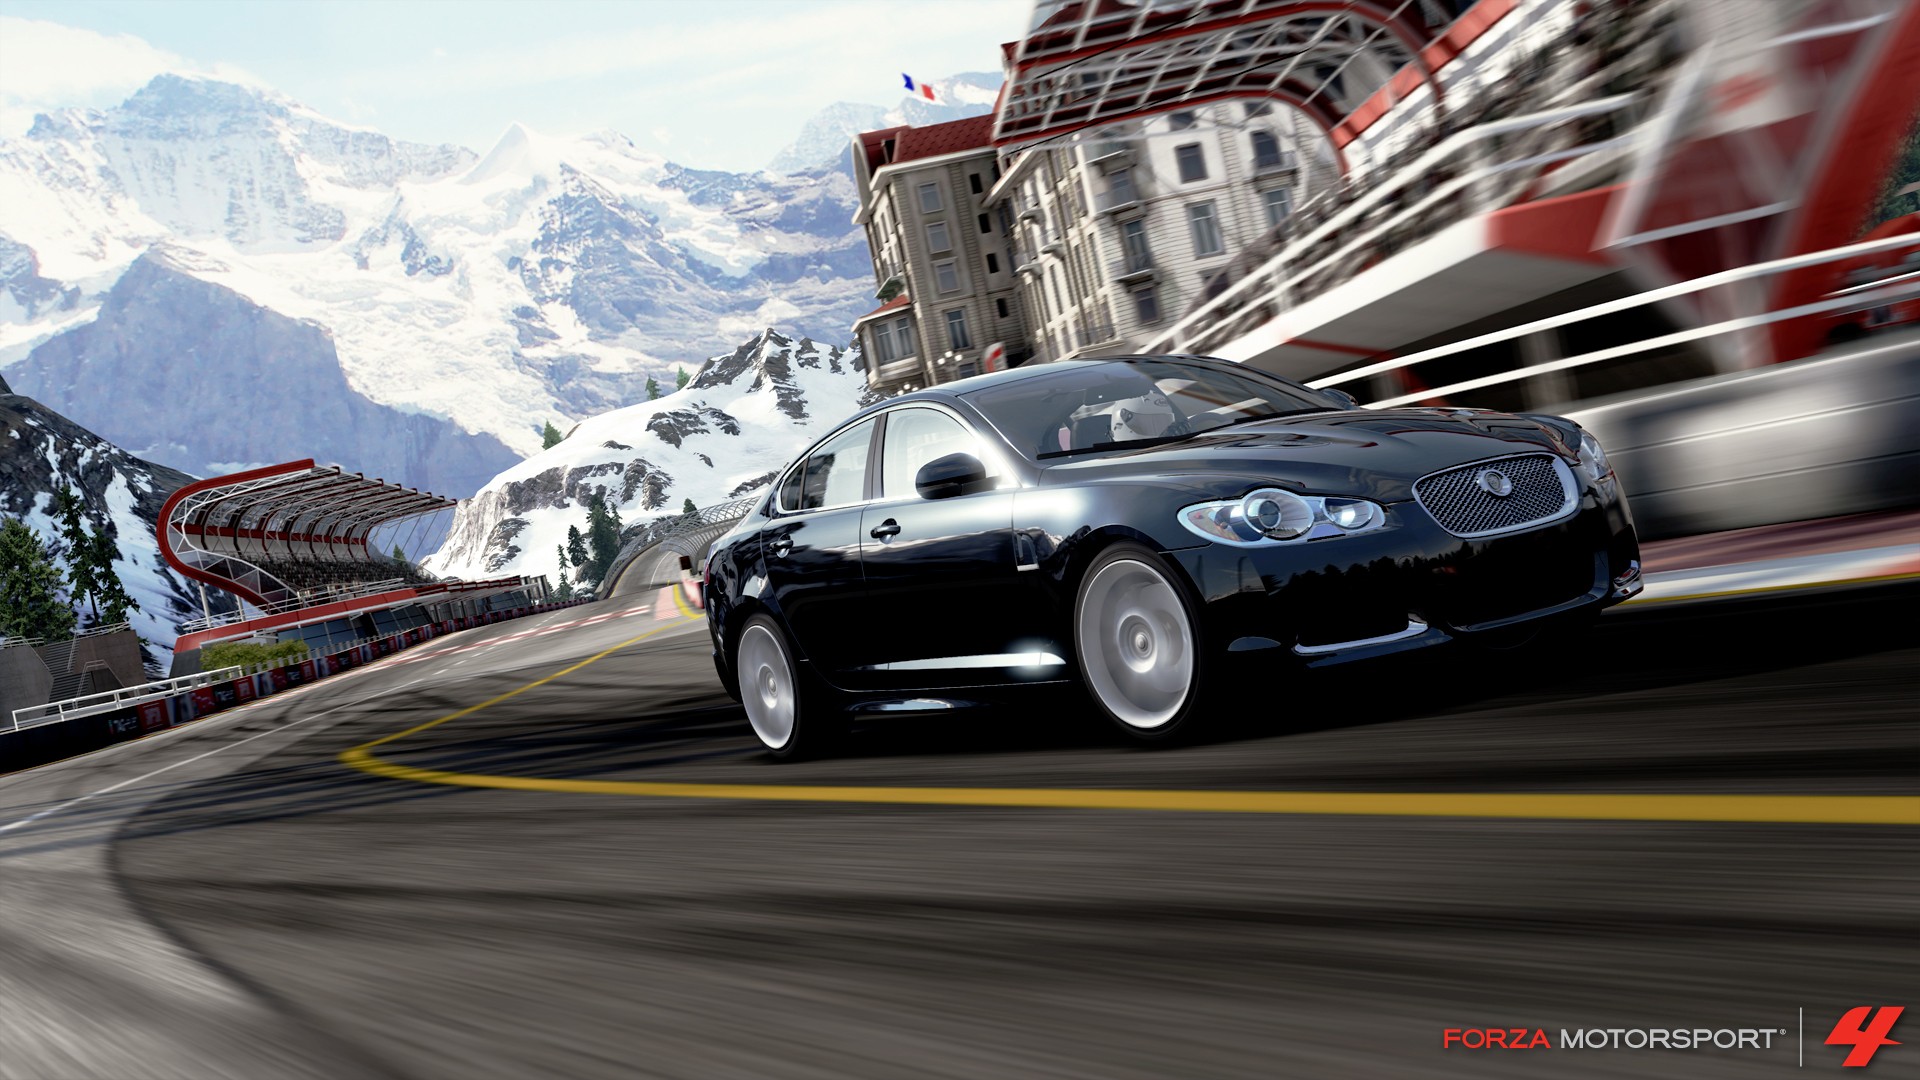 General 1920x1080 Forza Motorsport 4 car video games black cars racing vehicle Turn 10 Studios